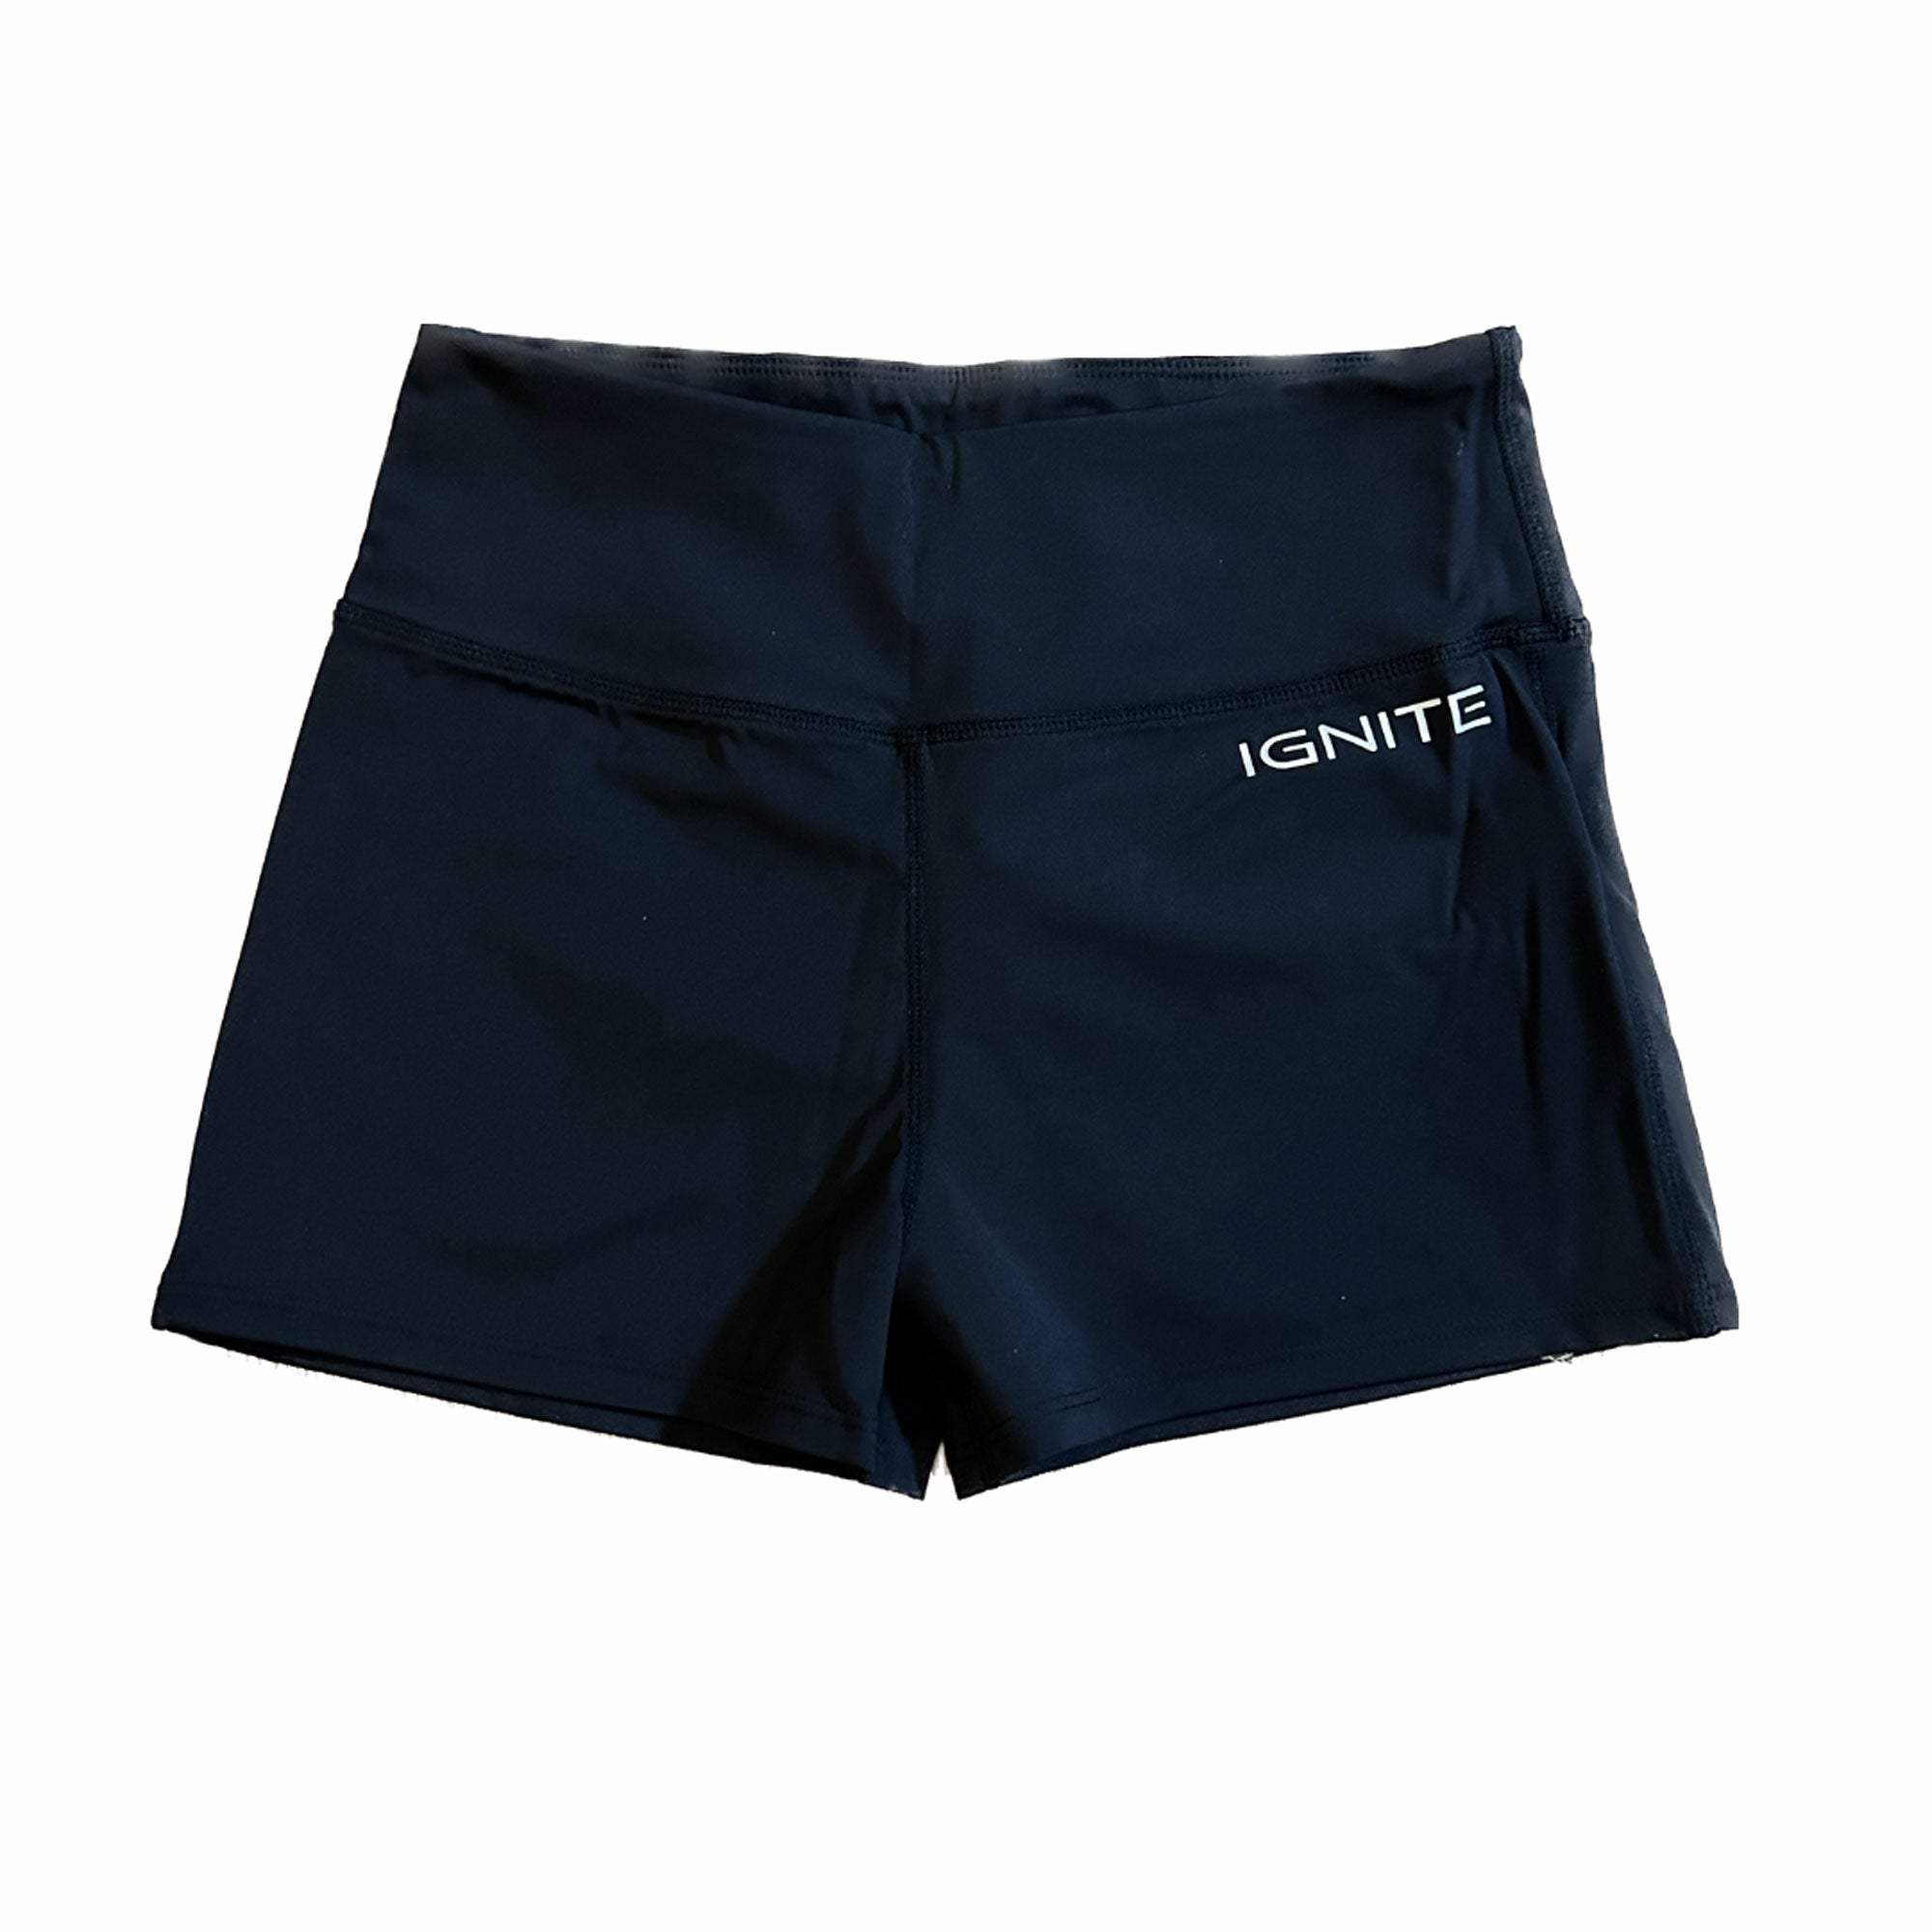 Ignite Women's Shorts